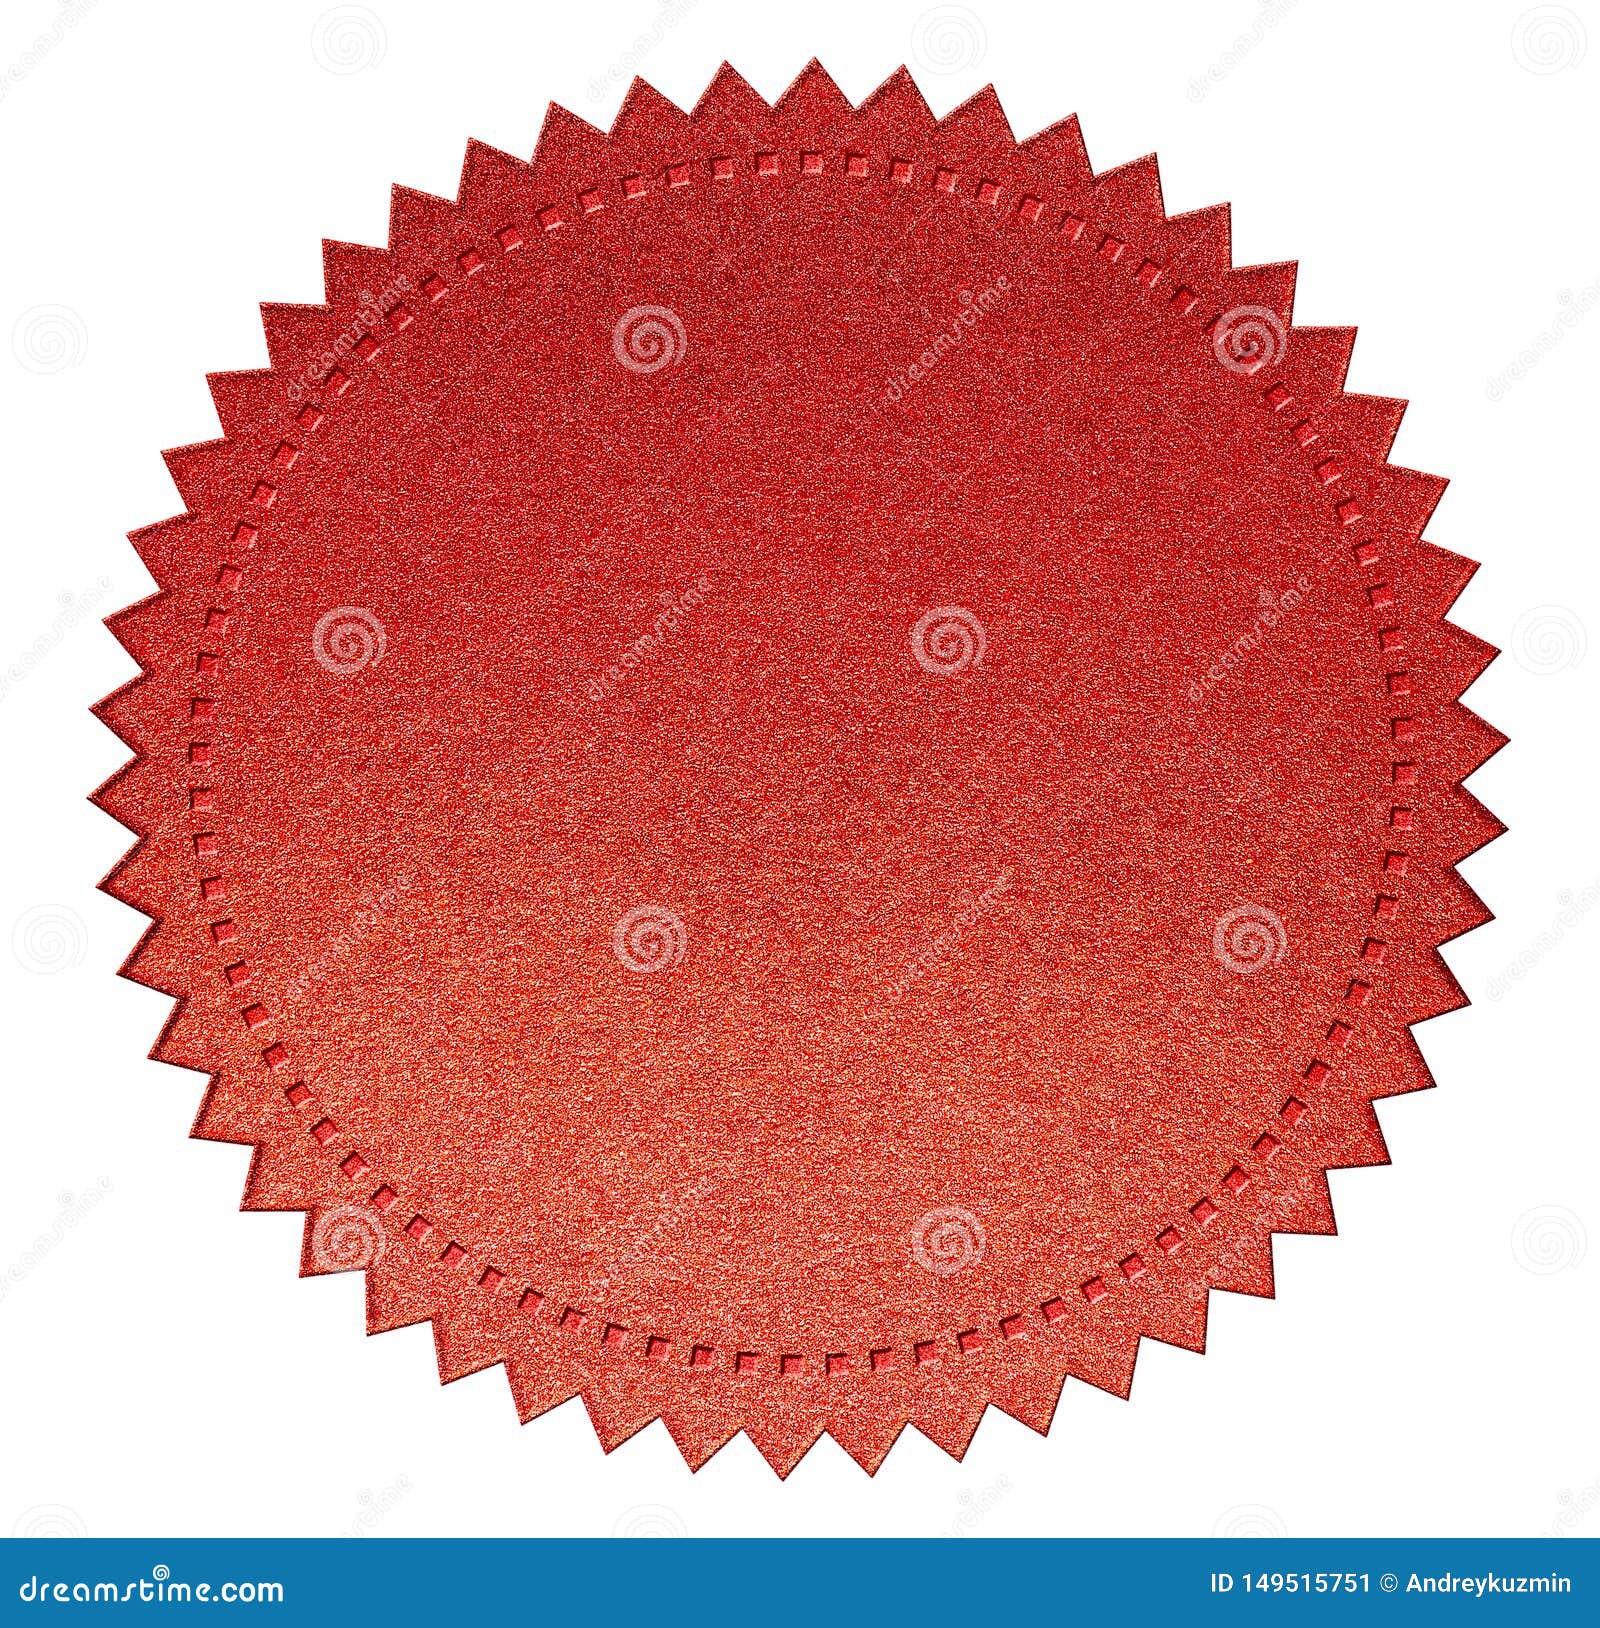 red diploma or certificate seal 